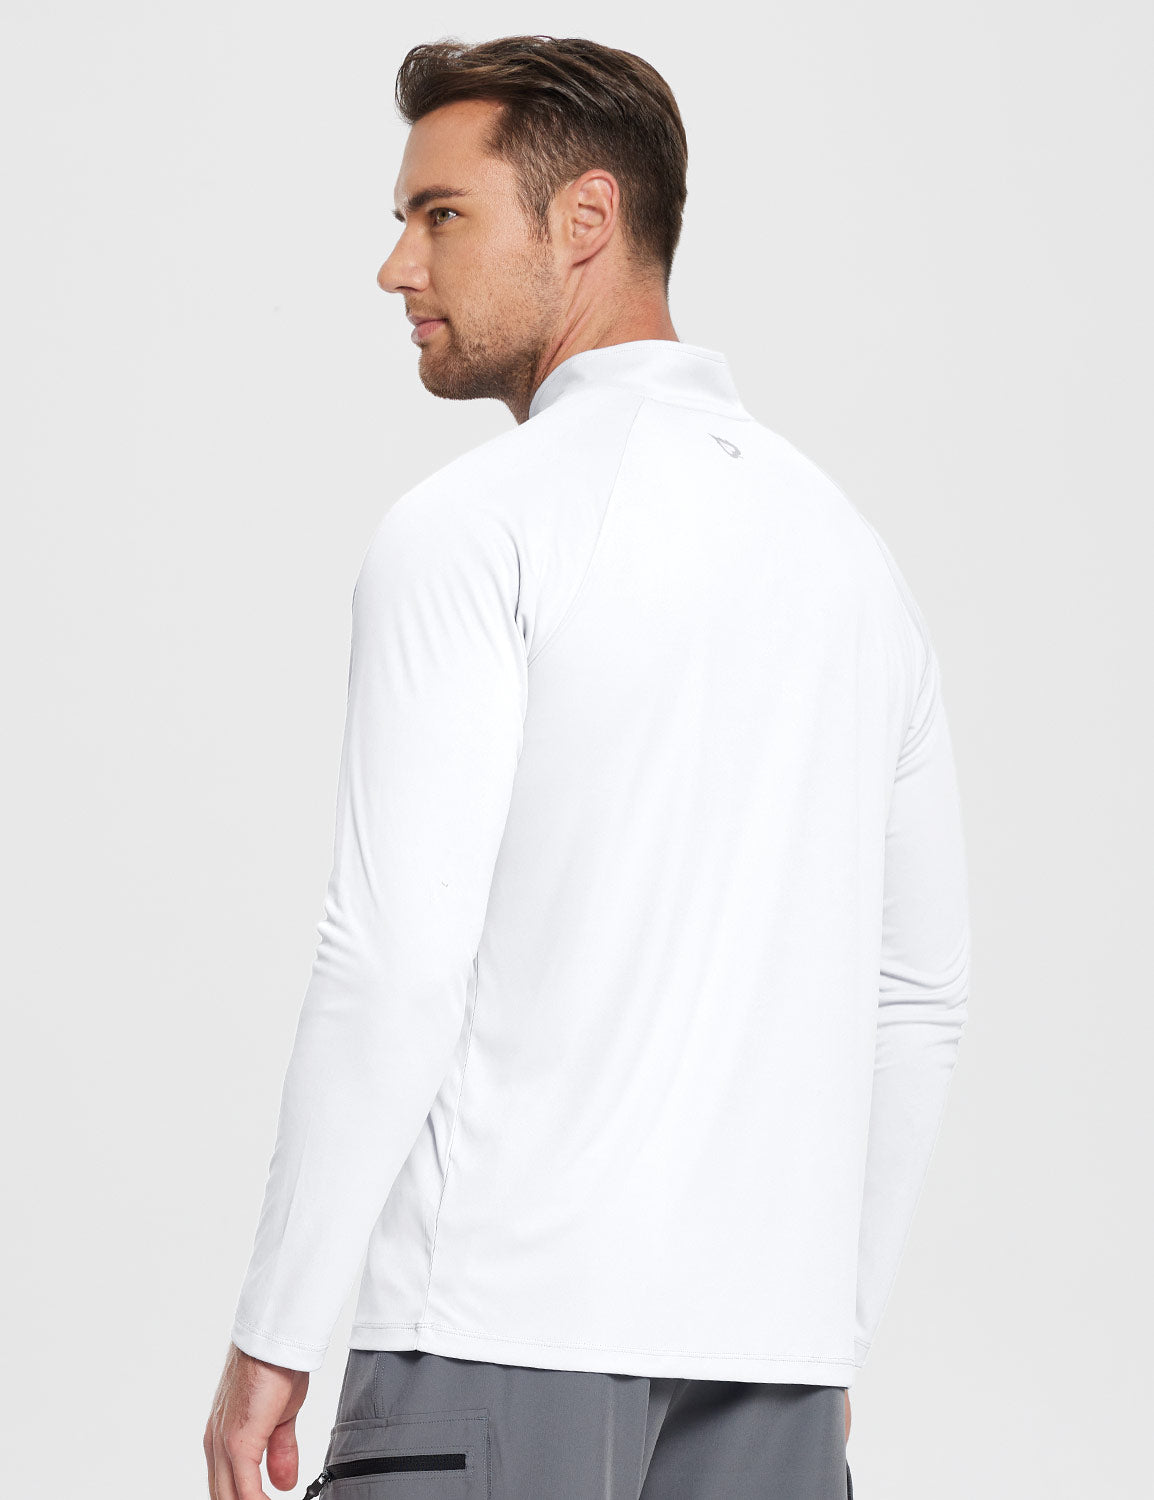 Baleaf Men's UPF 50+ Quarter Zip Sun Shirts Lucent White Back